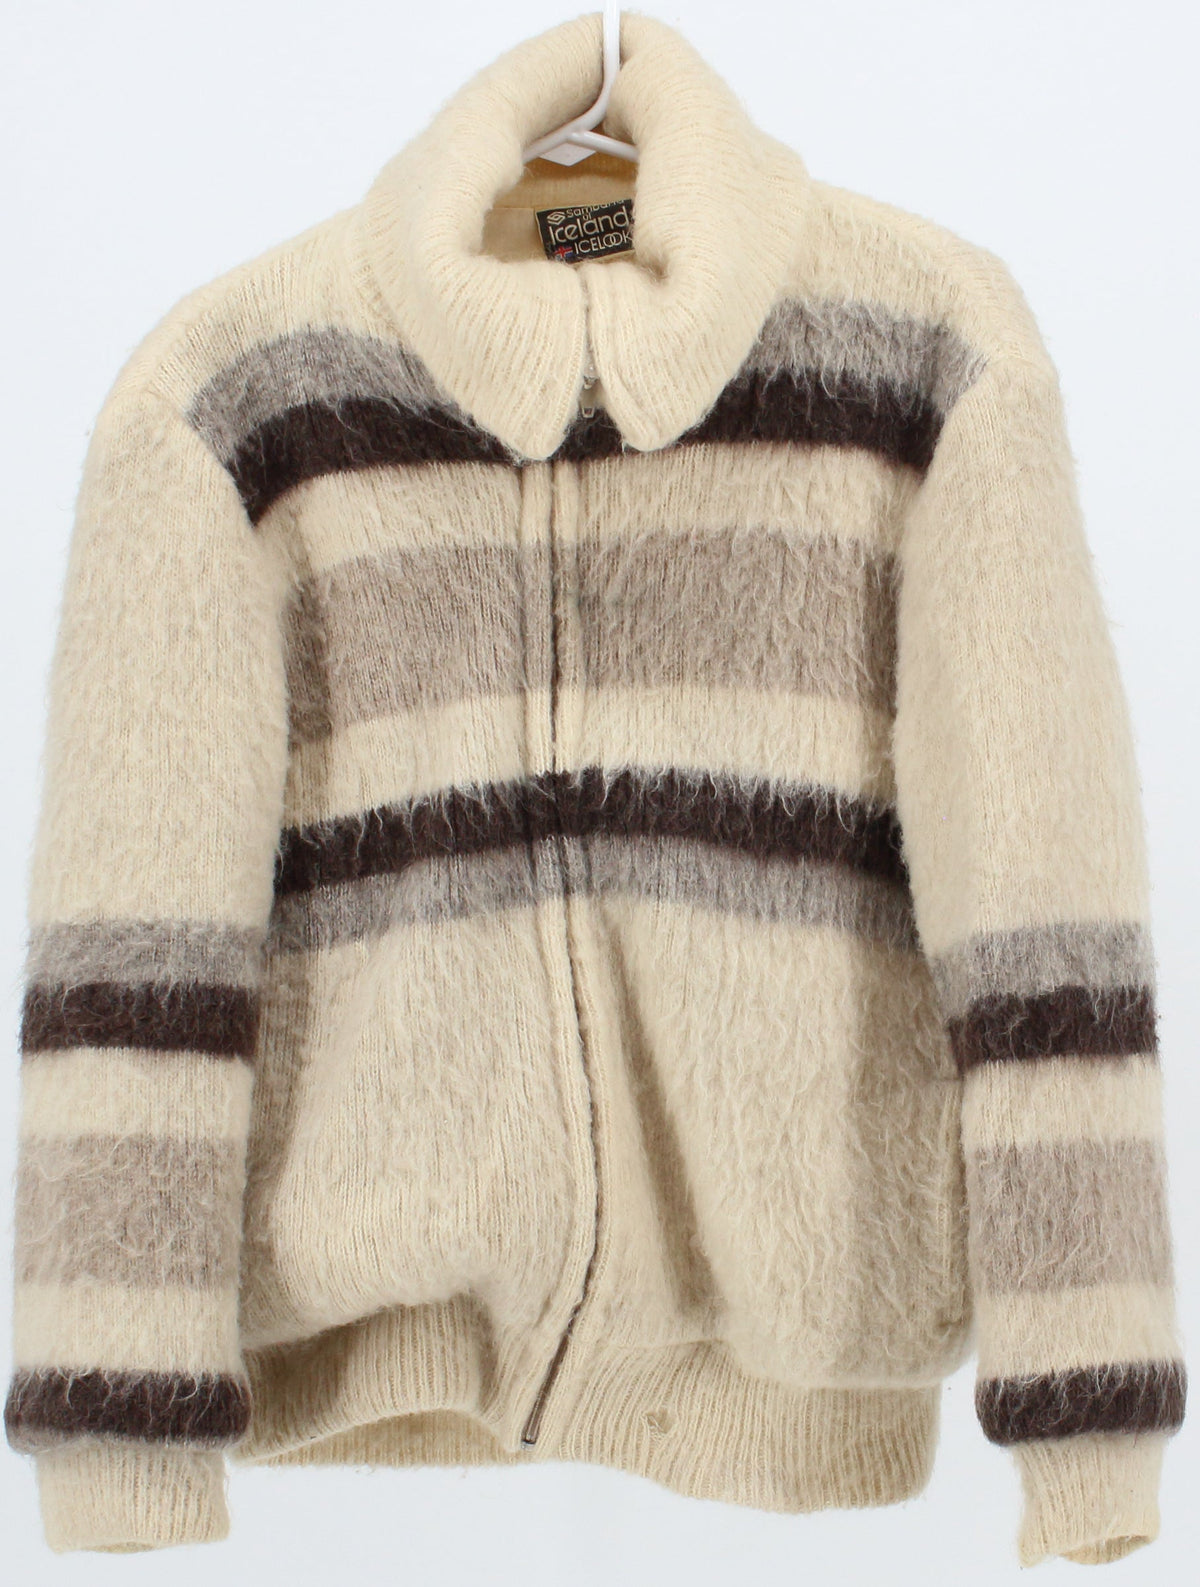 Samband of Iceland Icelook Beige Wool Zip Sweater